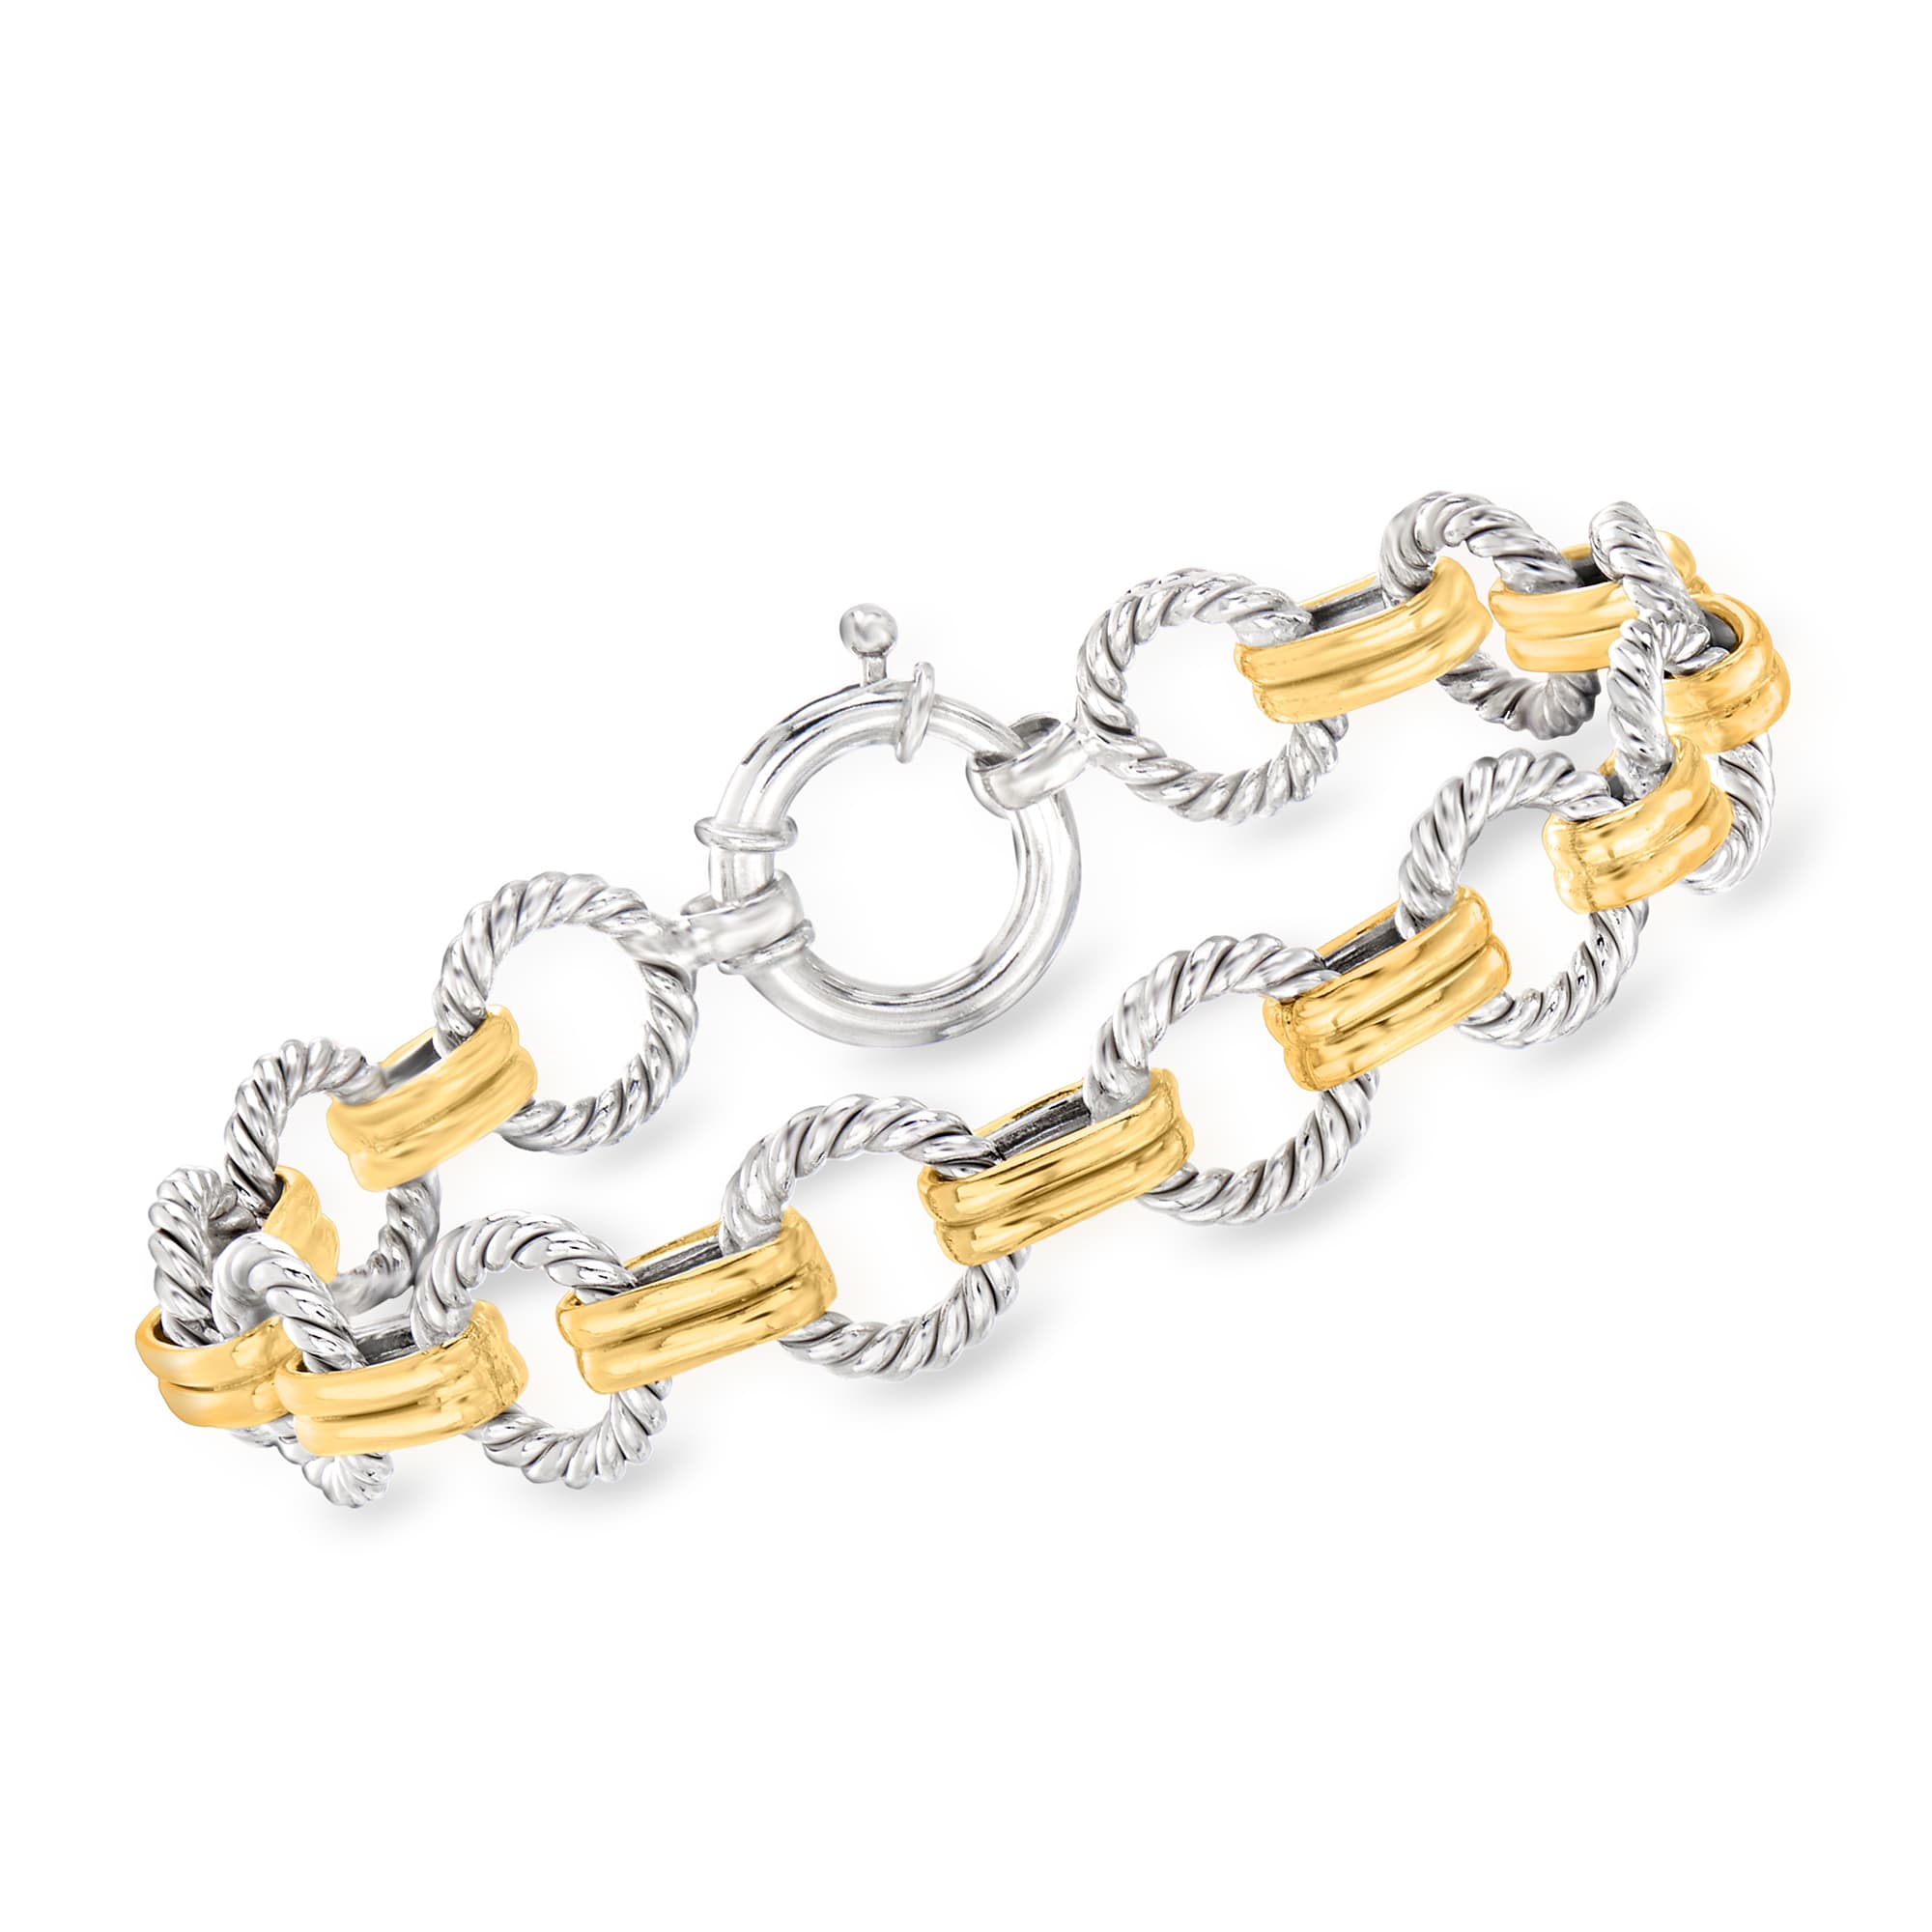 Ross-Simons - Sterling Silver Jewelry Set: Three Link Bracelets. 8